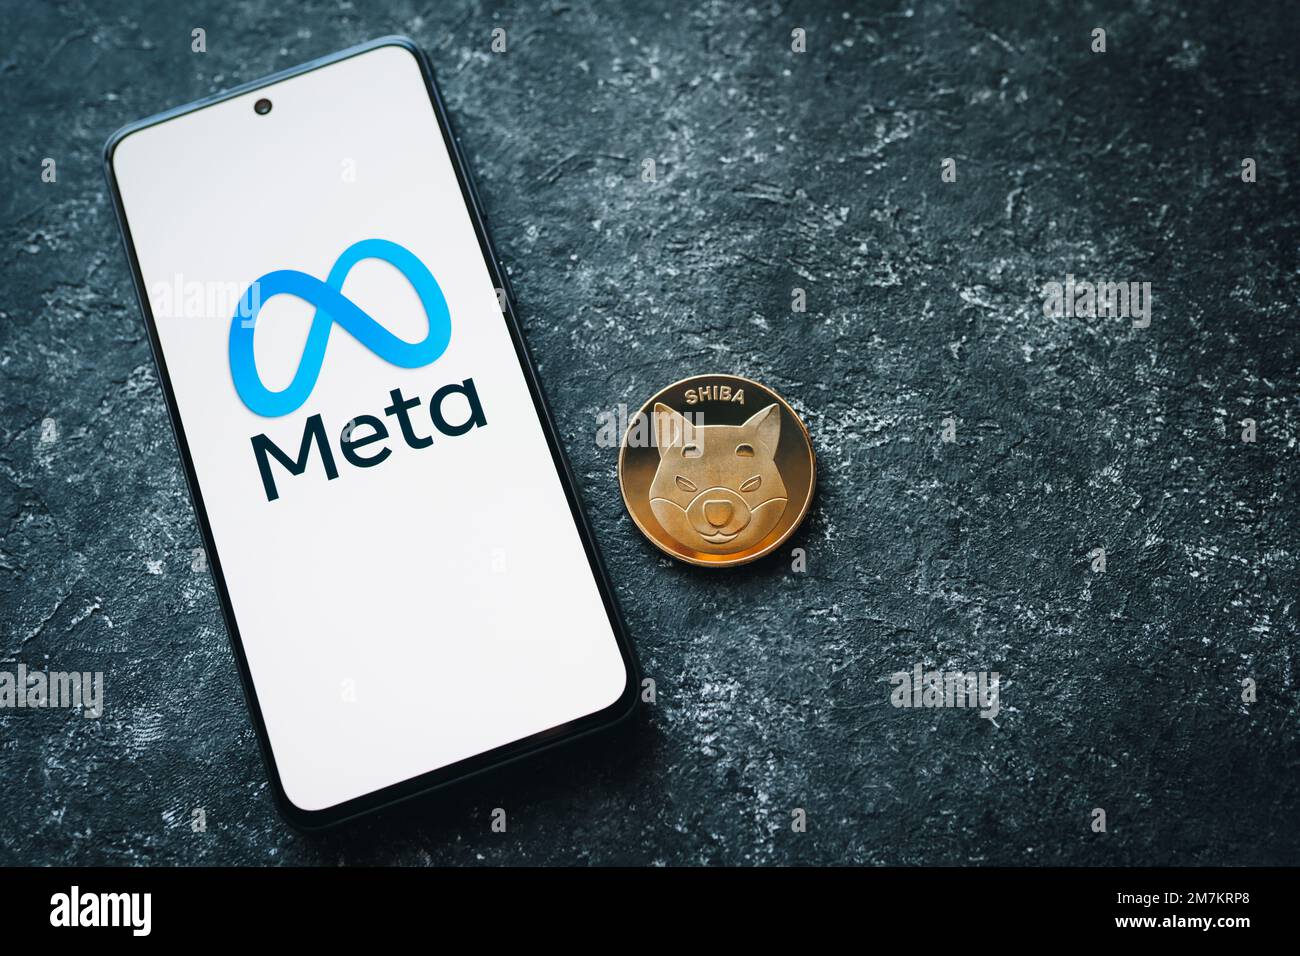 Shiba Inu crypto coin and Meta logo on phone screen. SHIB token and the Metaverse. MSHIBA or Meta Shiba cryptocurrency. Swansea, UK - January 3, 2023. Stock Photo